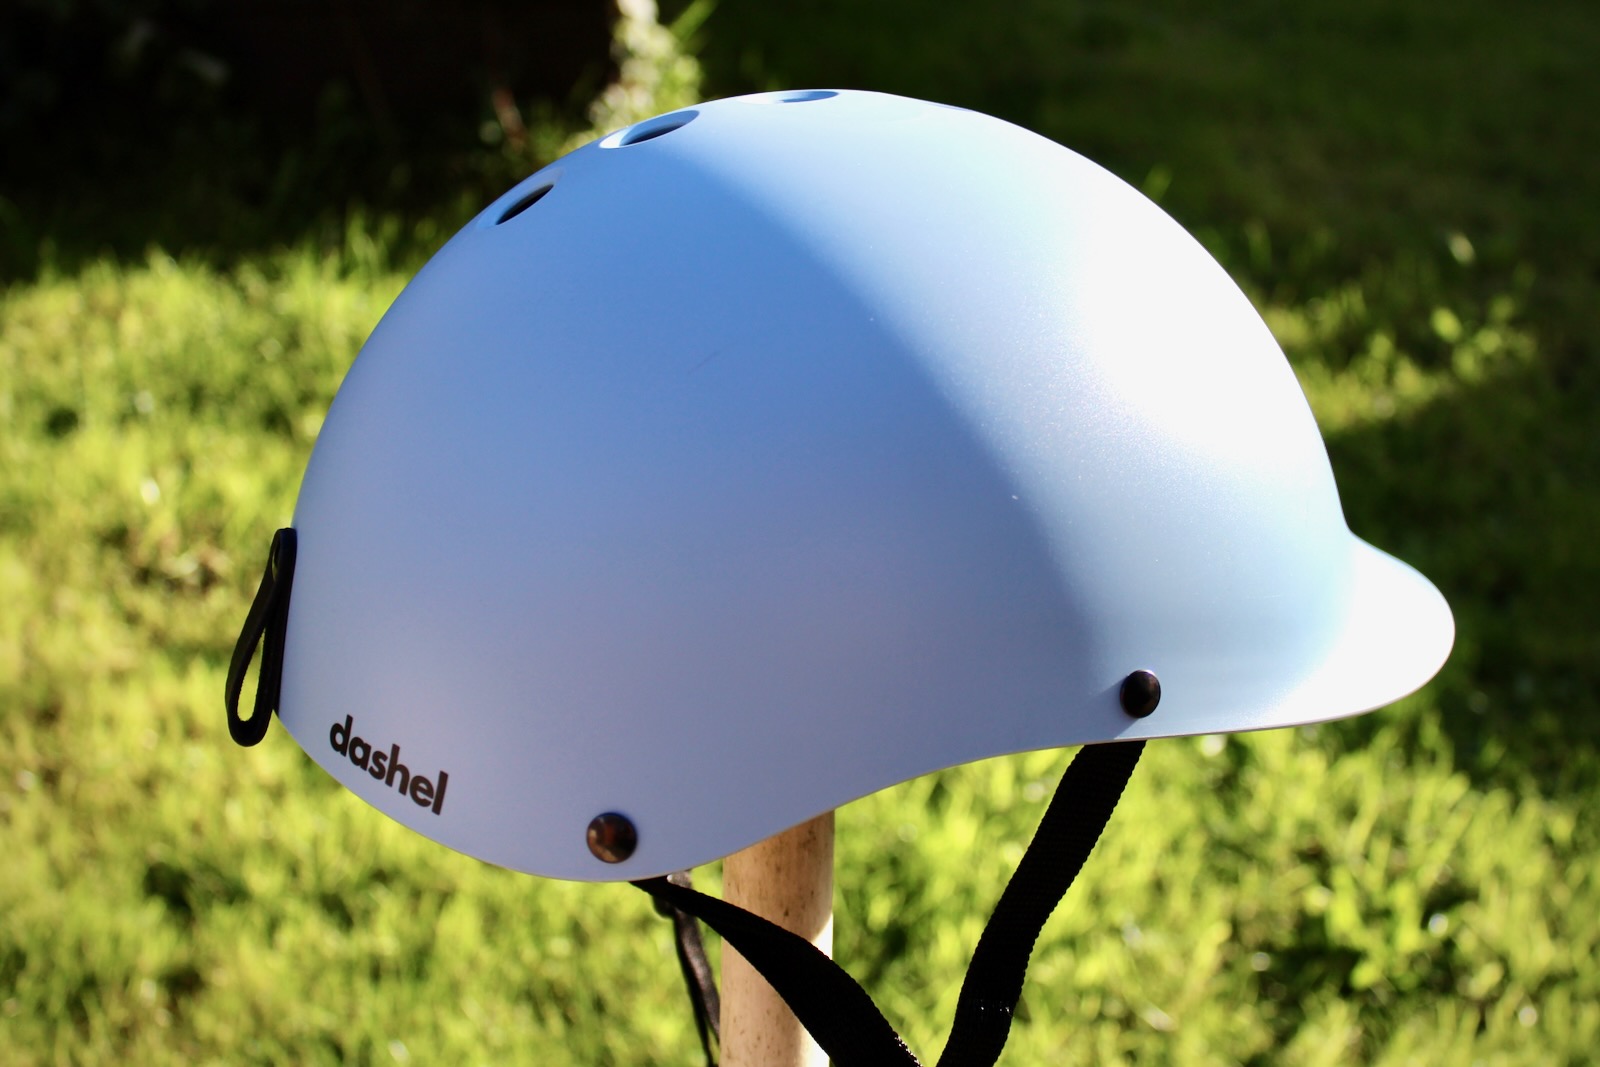 Dashel Urban Cycle Helmet Review